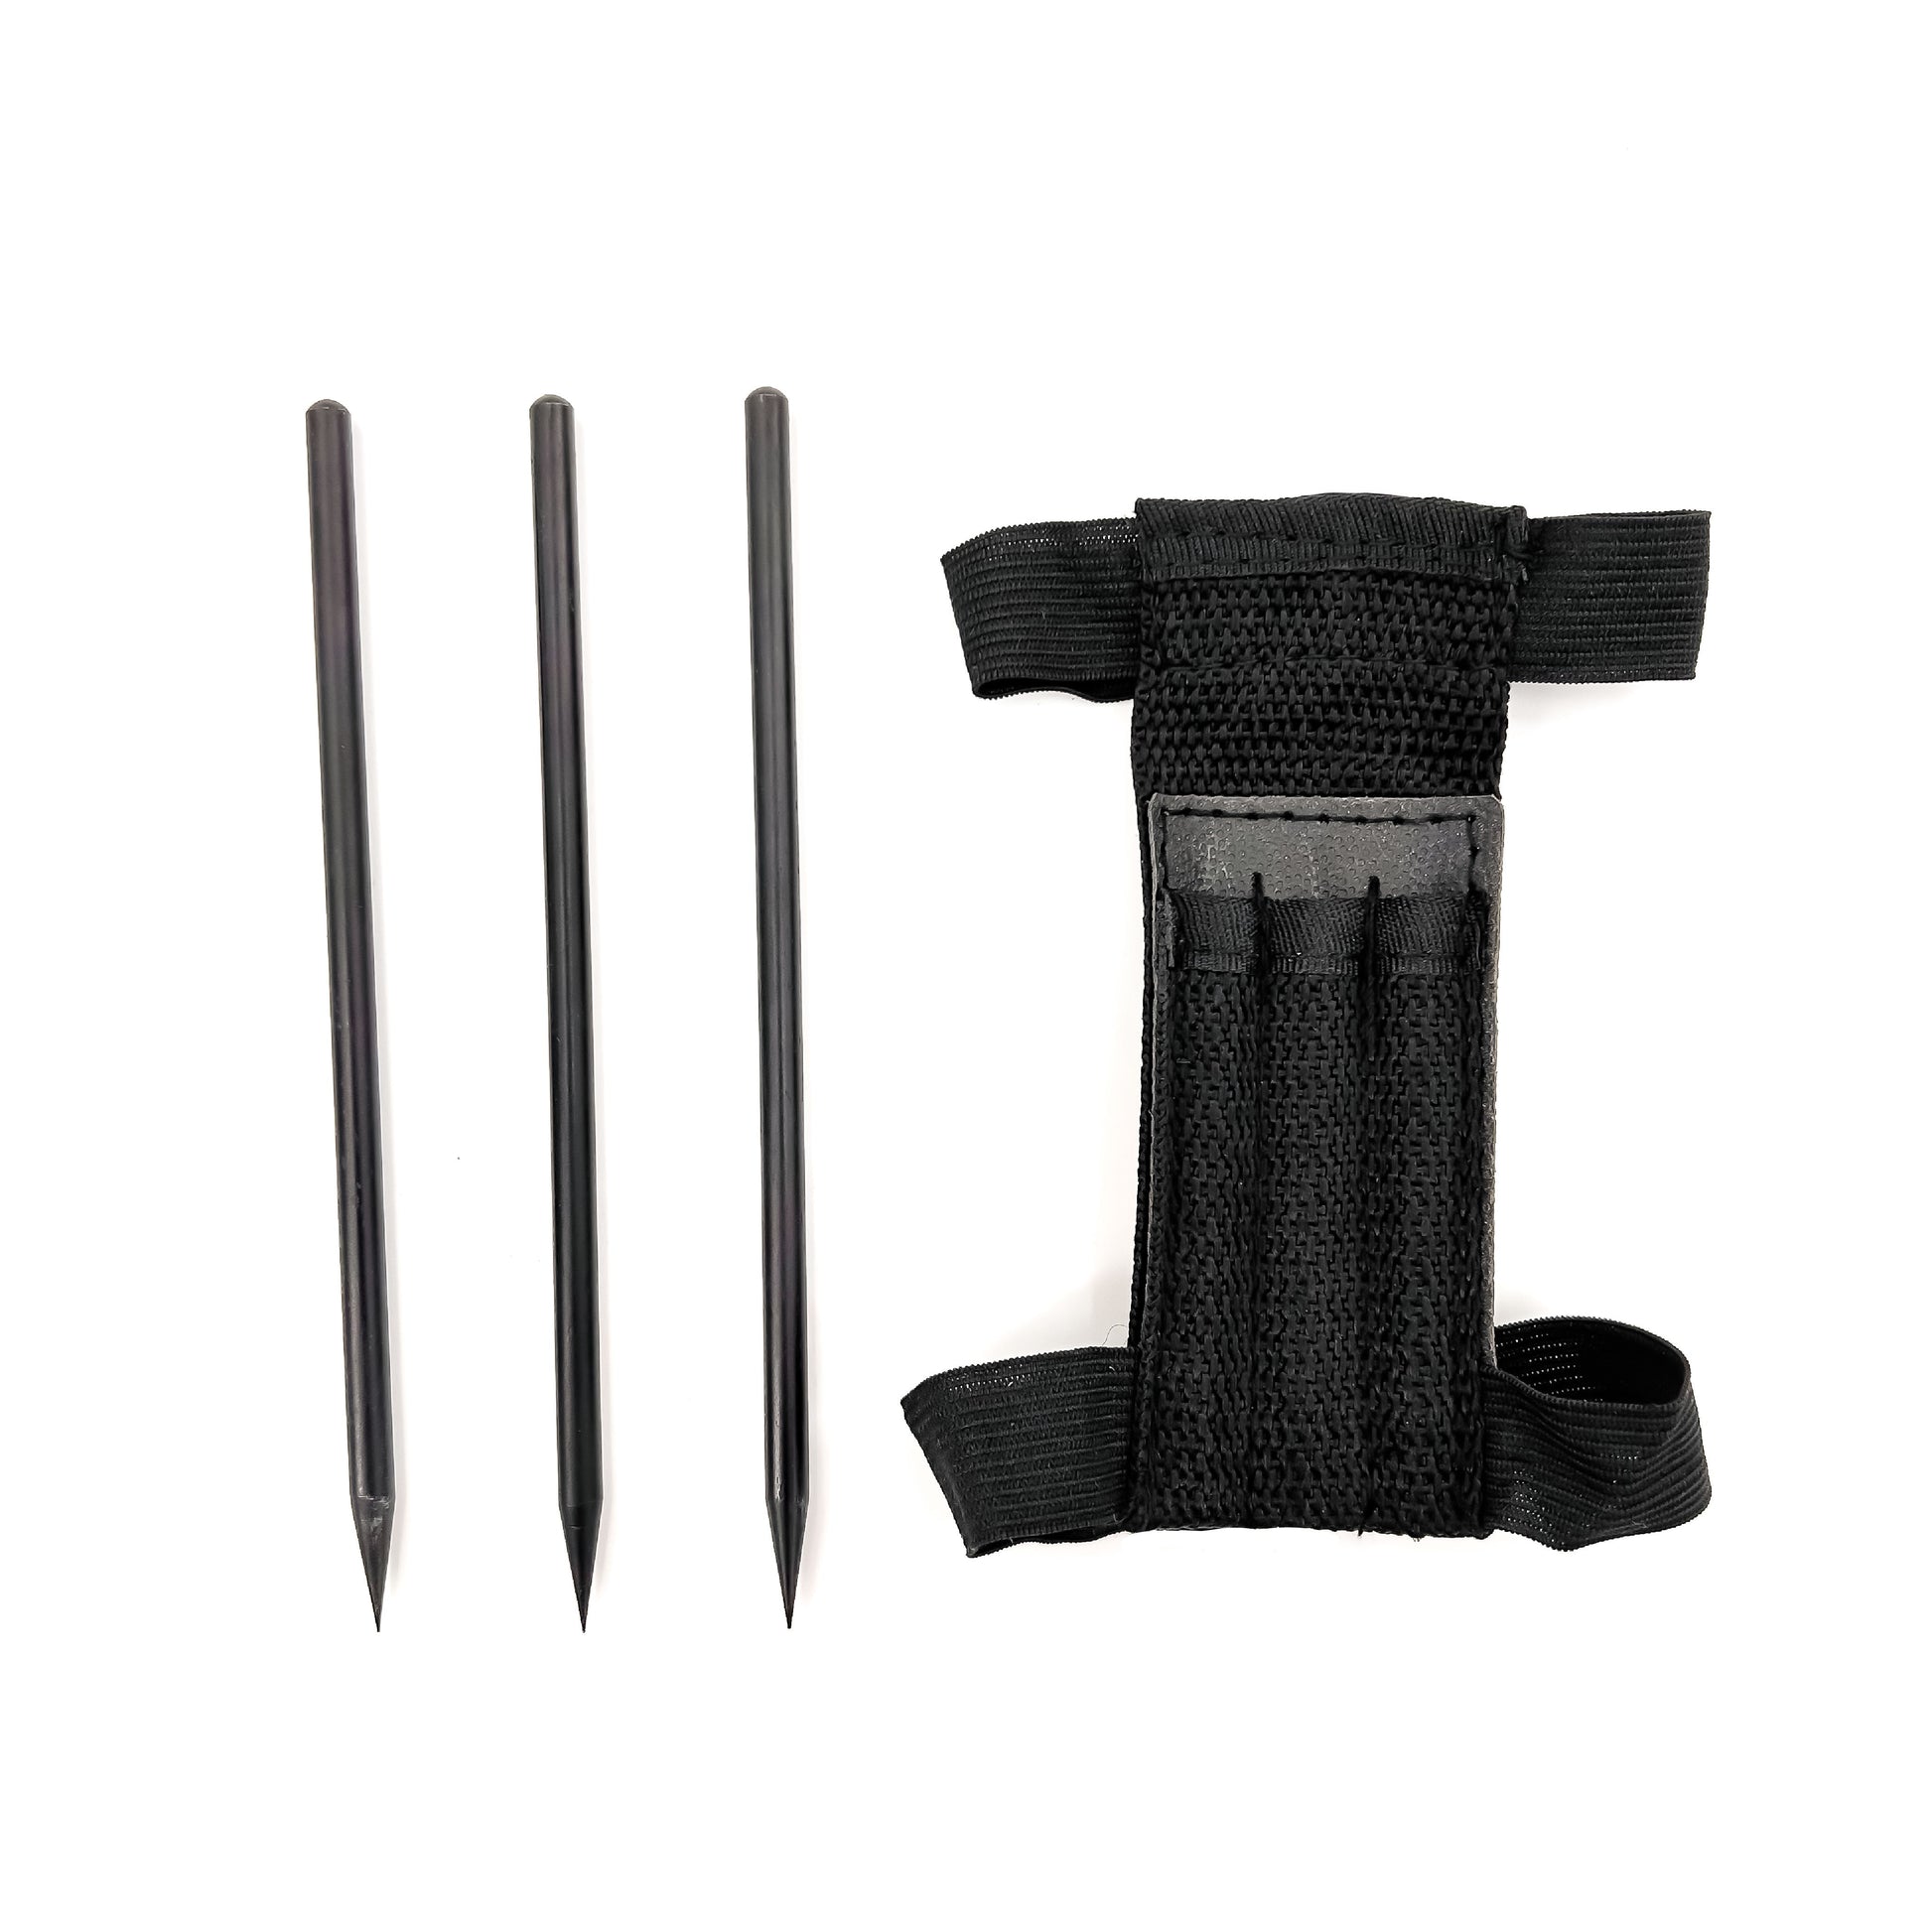 Ninja Assassin Arm Spikes 3pcs Set With Belt Pouch-0